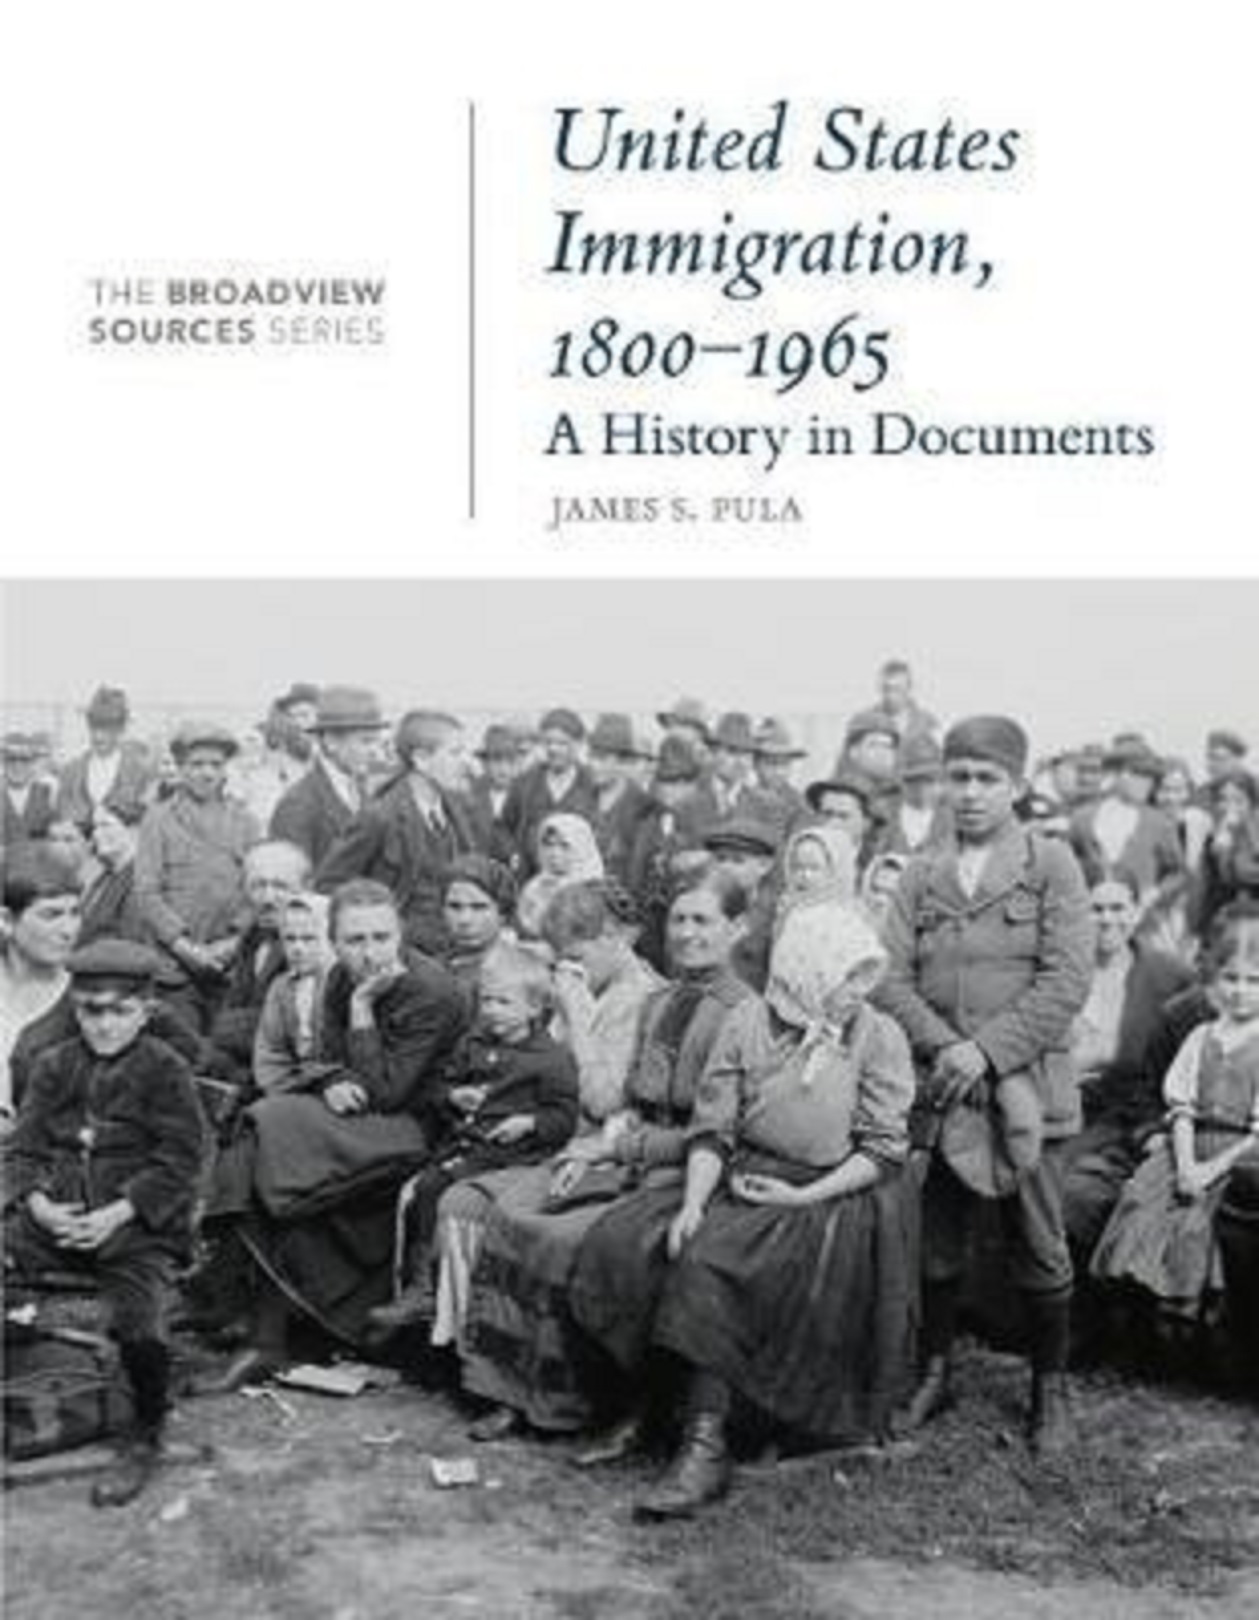 United States Immigration, 1800-1965